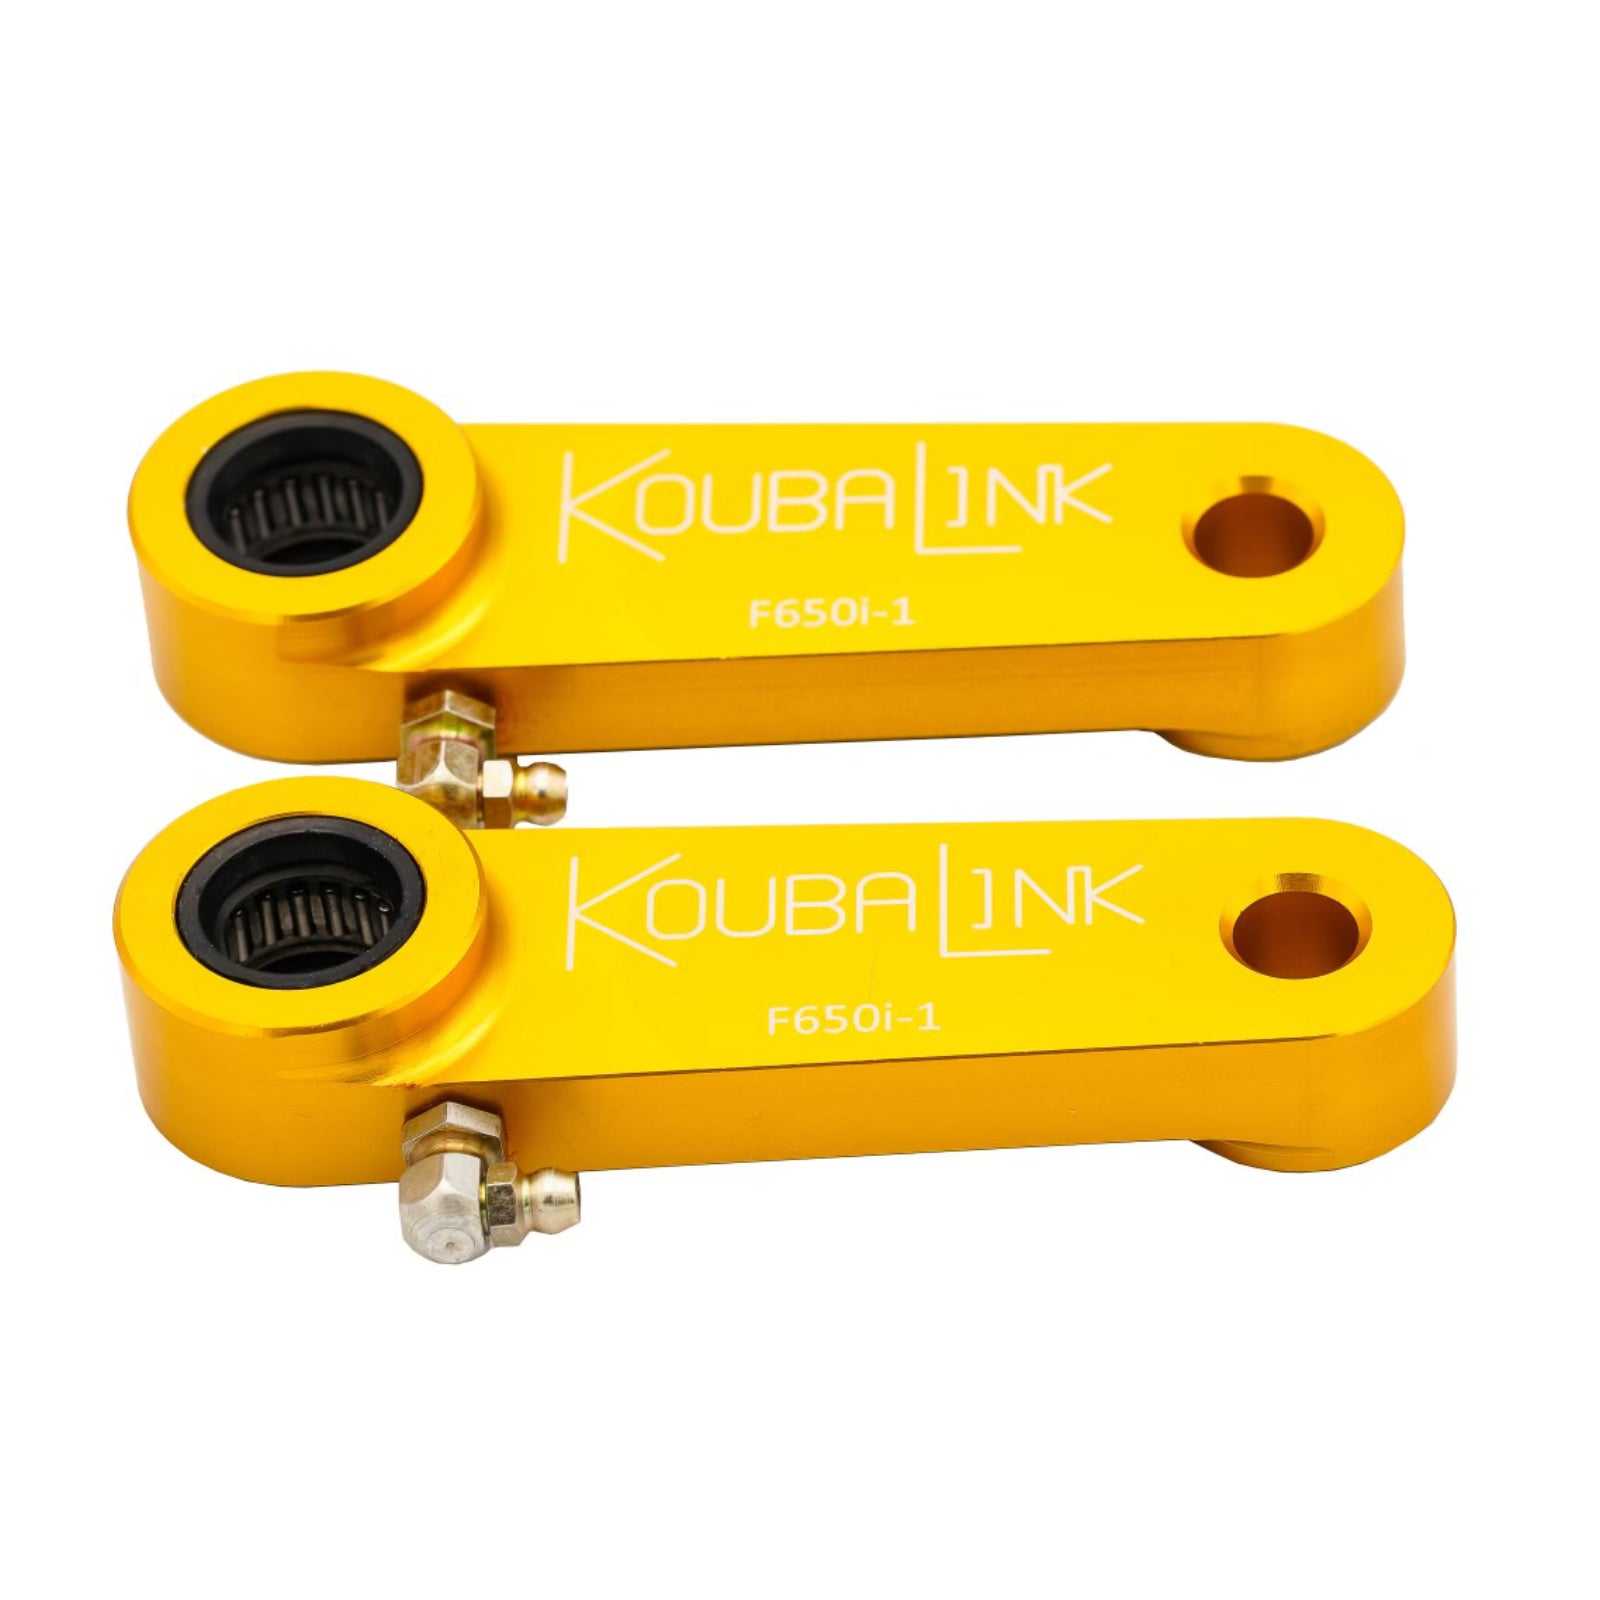 KoubaLink, Koubalink Stock Replacement Link F650I-0 – Gold